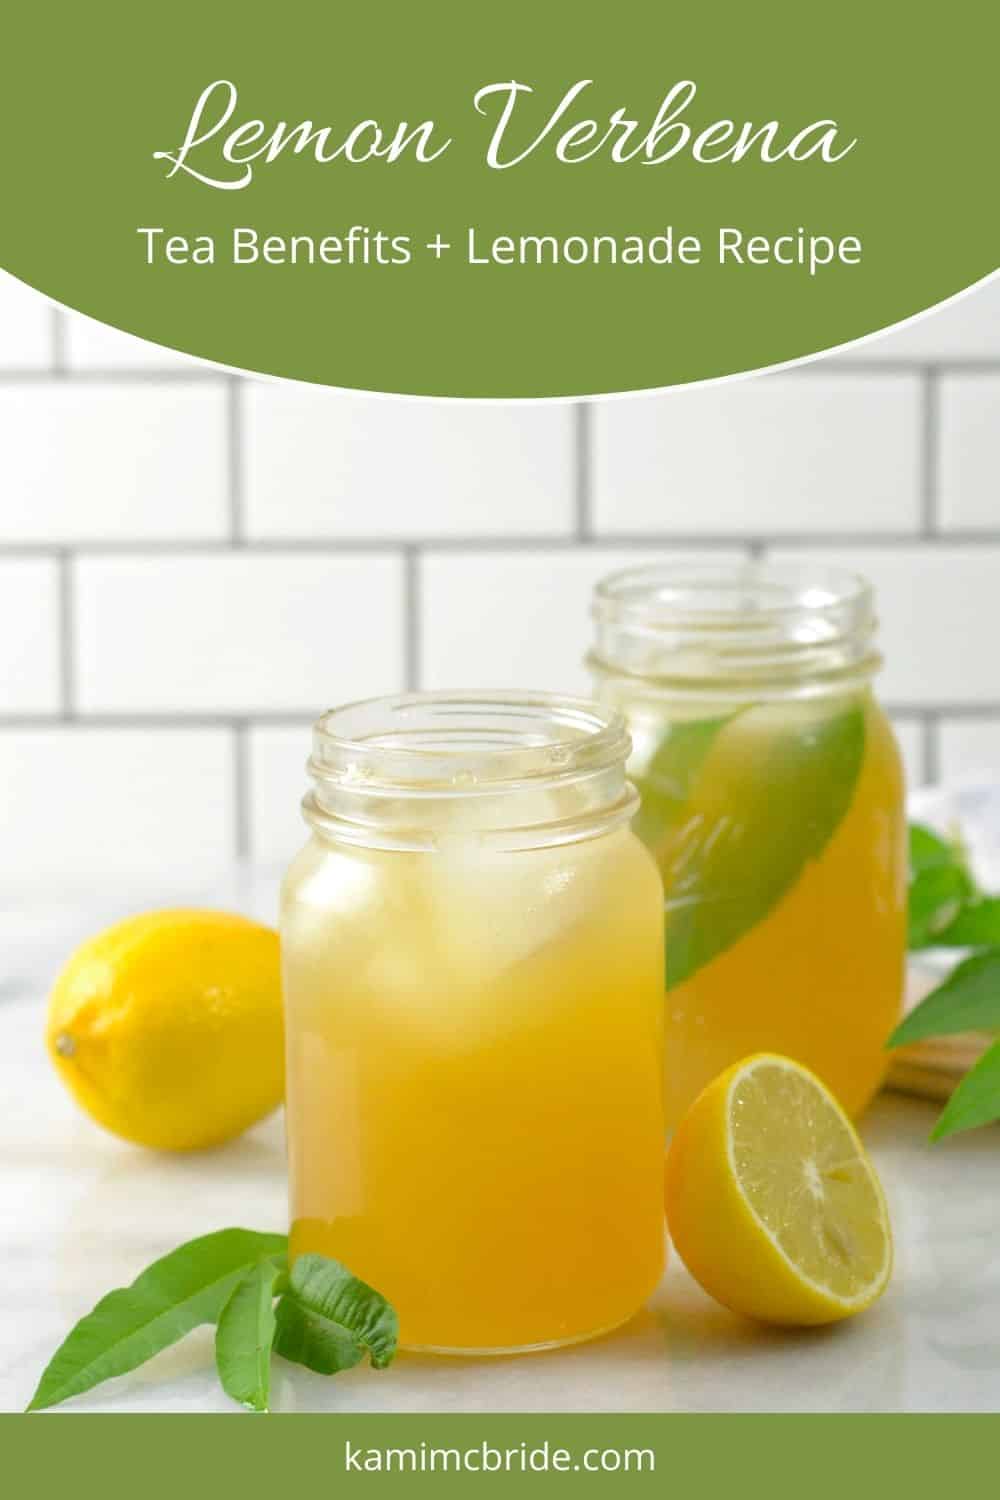 Lemon verbena tea – the recipe